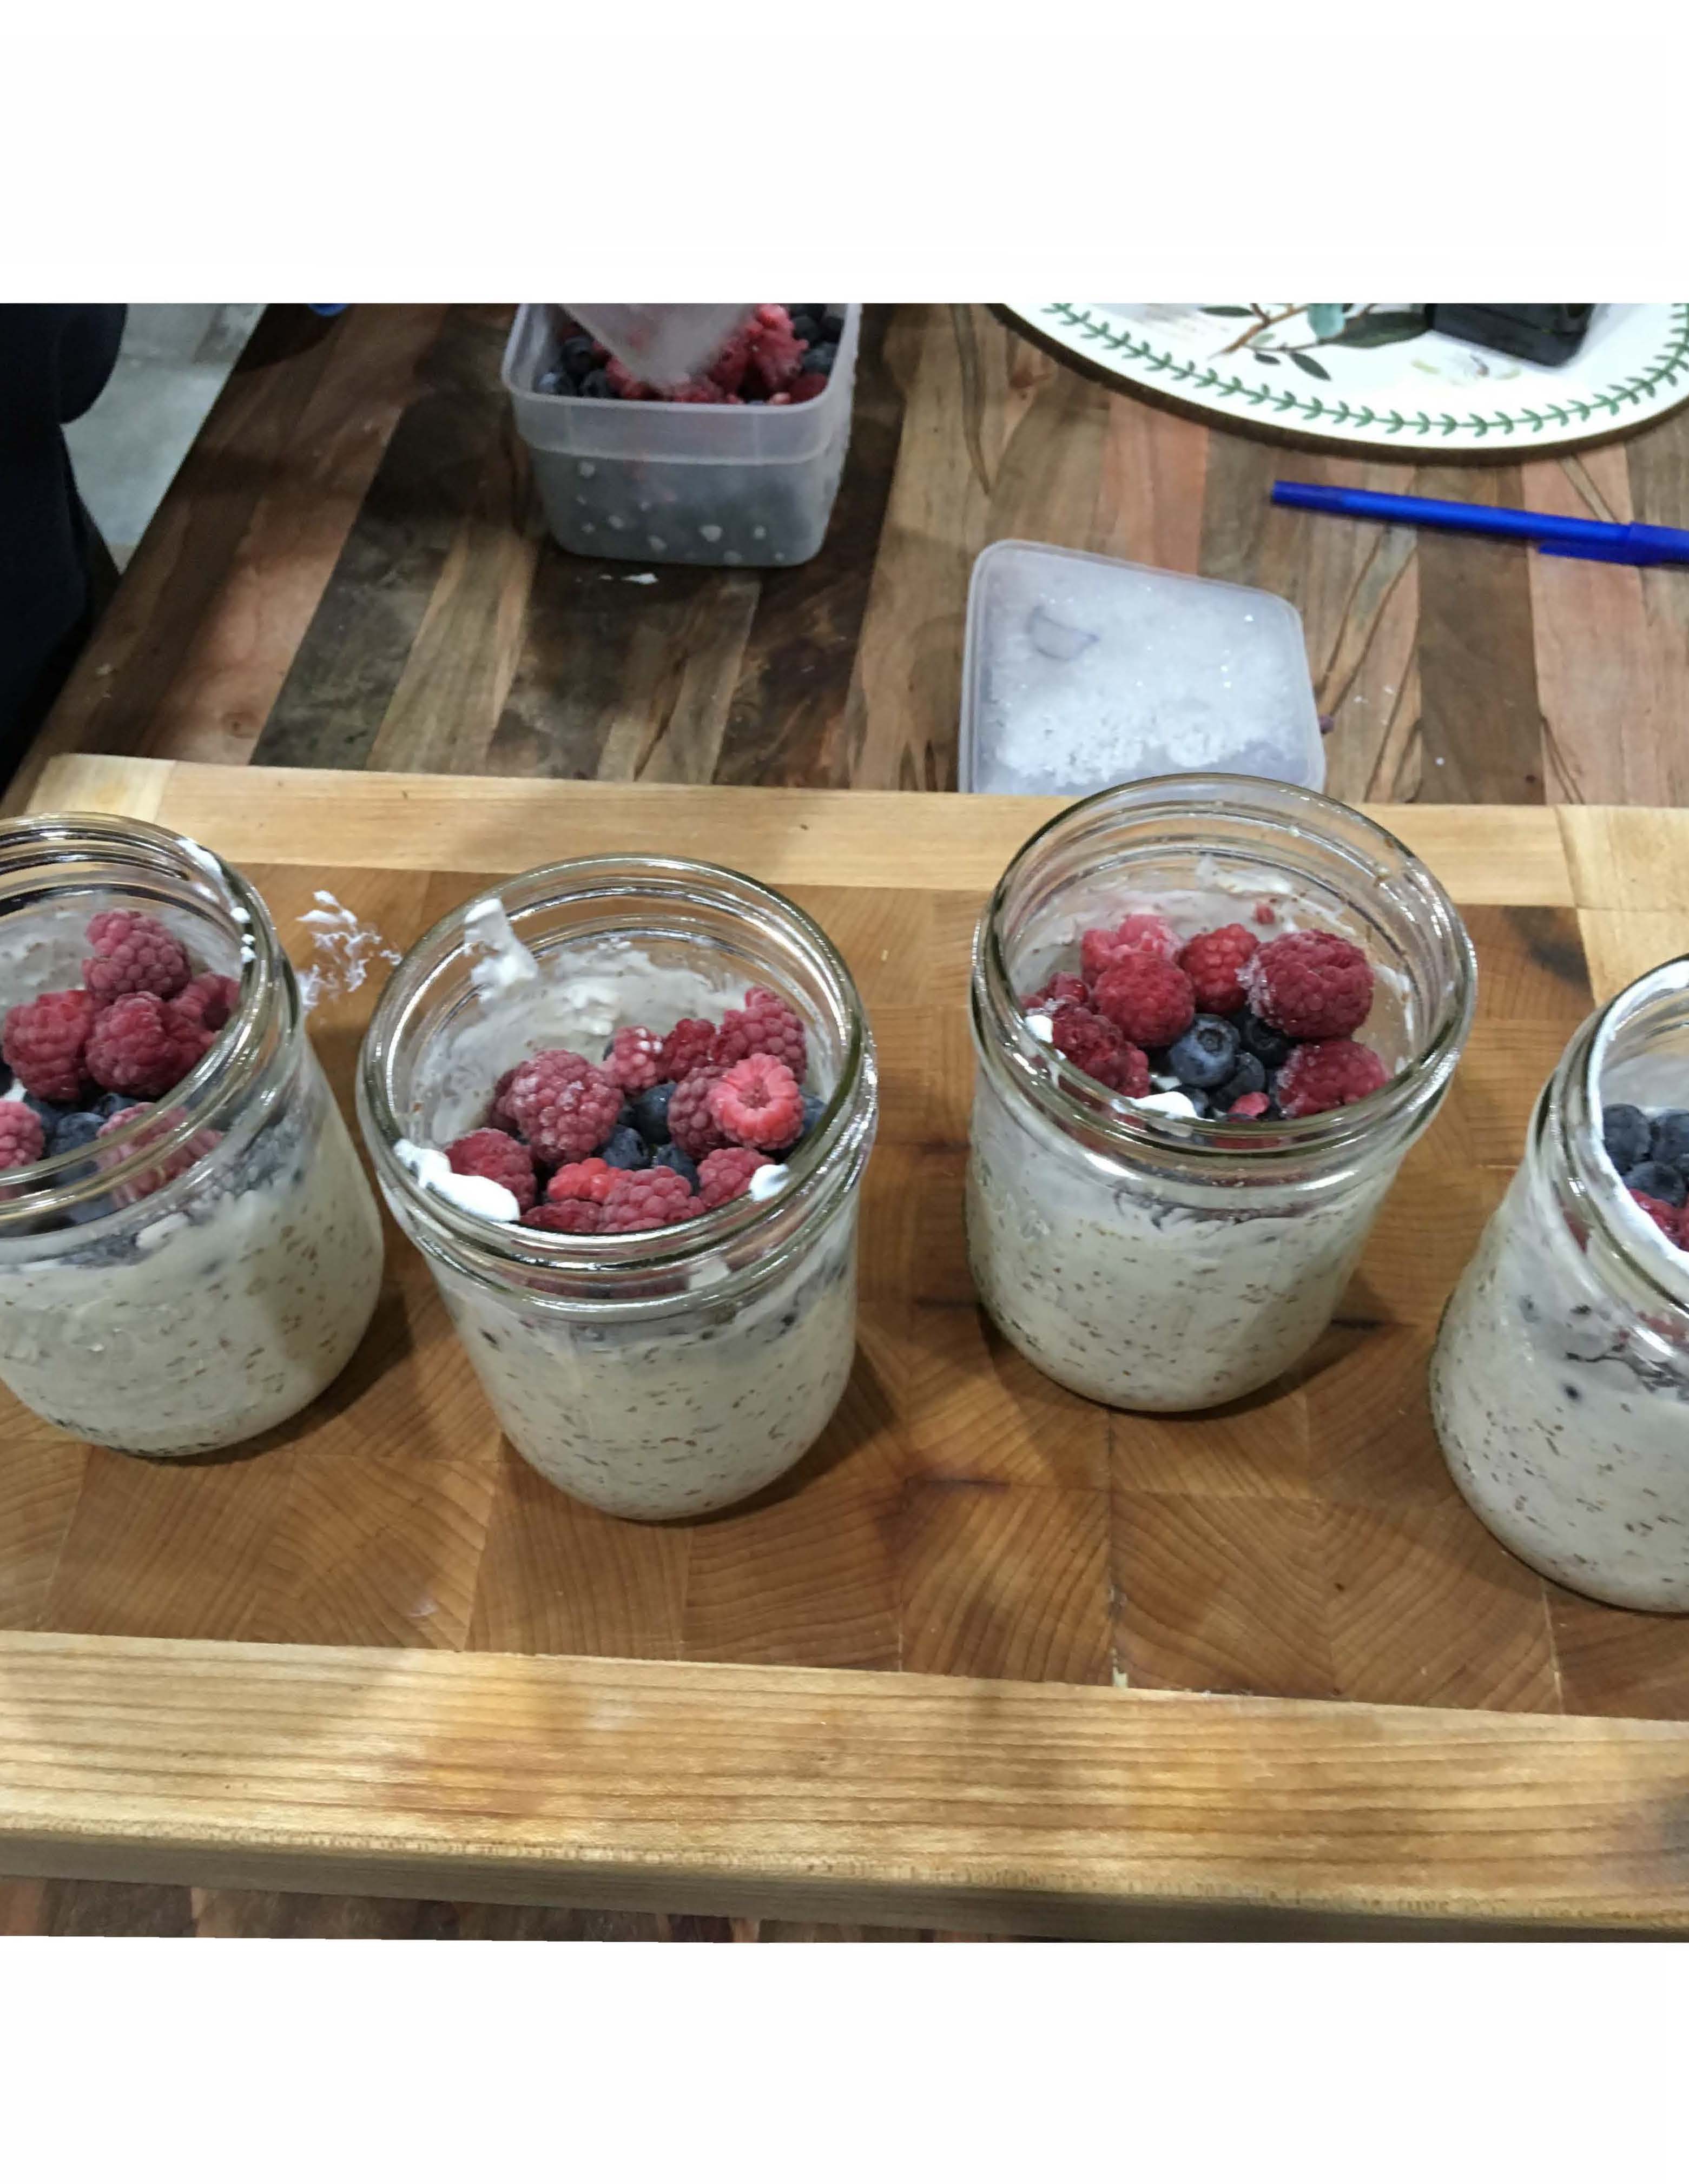 Oats, yogurt, fruit in glass canning jars